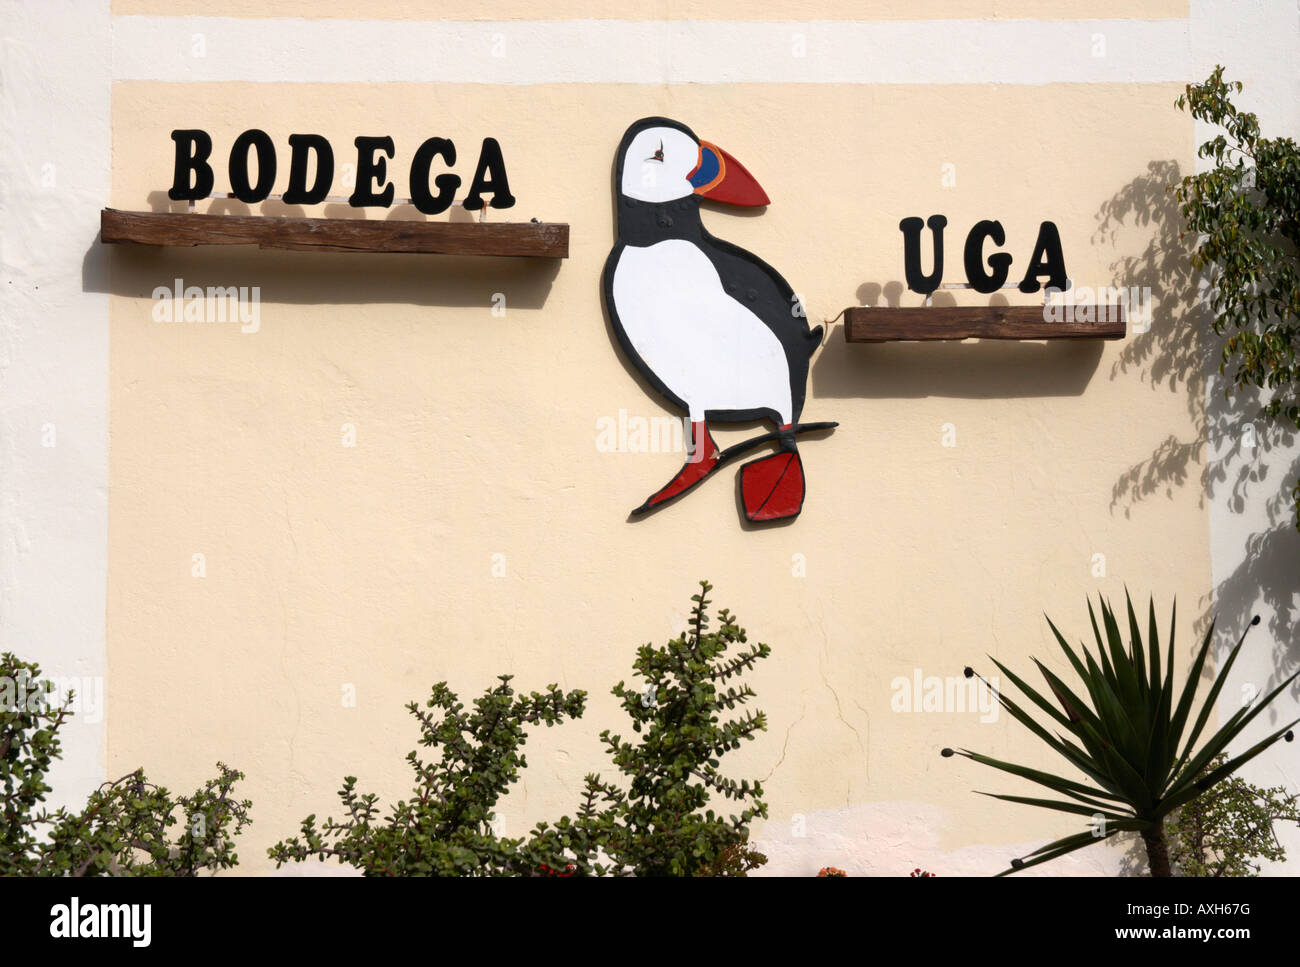 Bodega Uga on Lanzarote in the Canary islands. Stock Photo